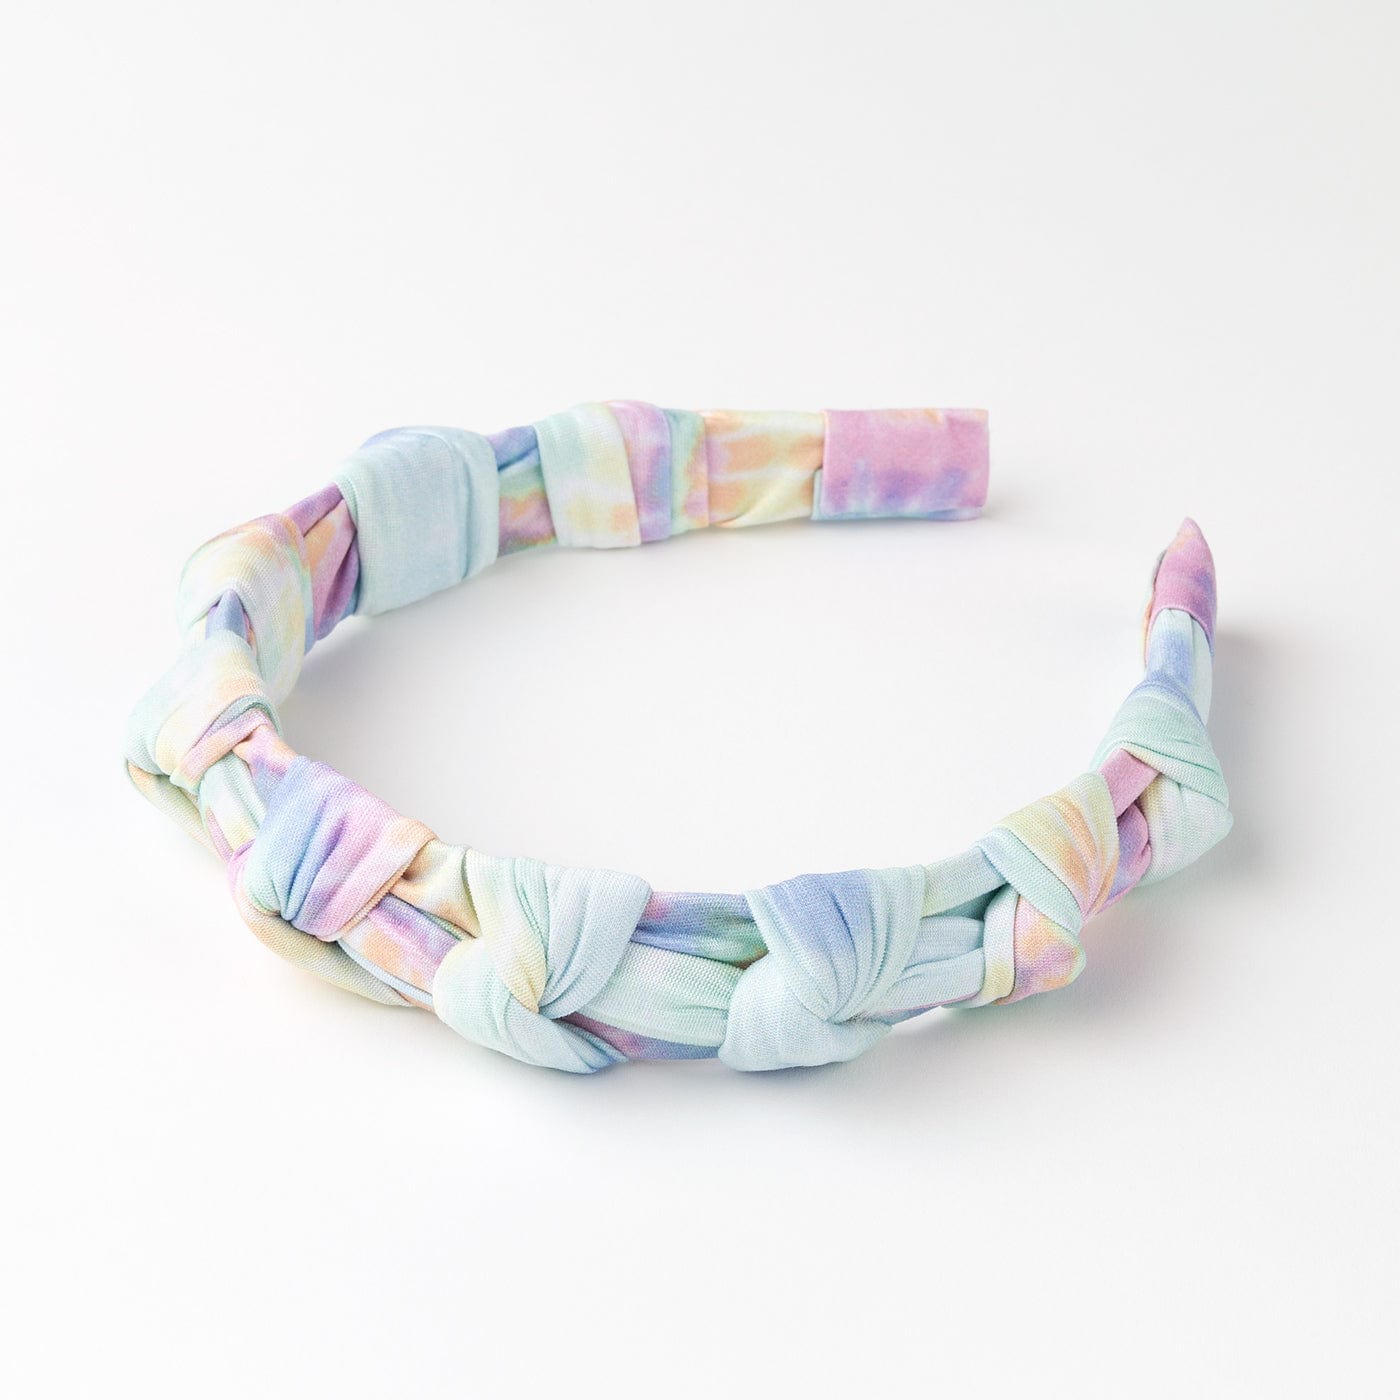 CONGUITOS TEXTIL Accessories Multicolor Knots Hairband